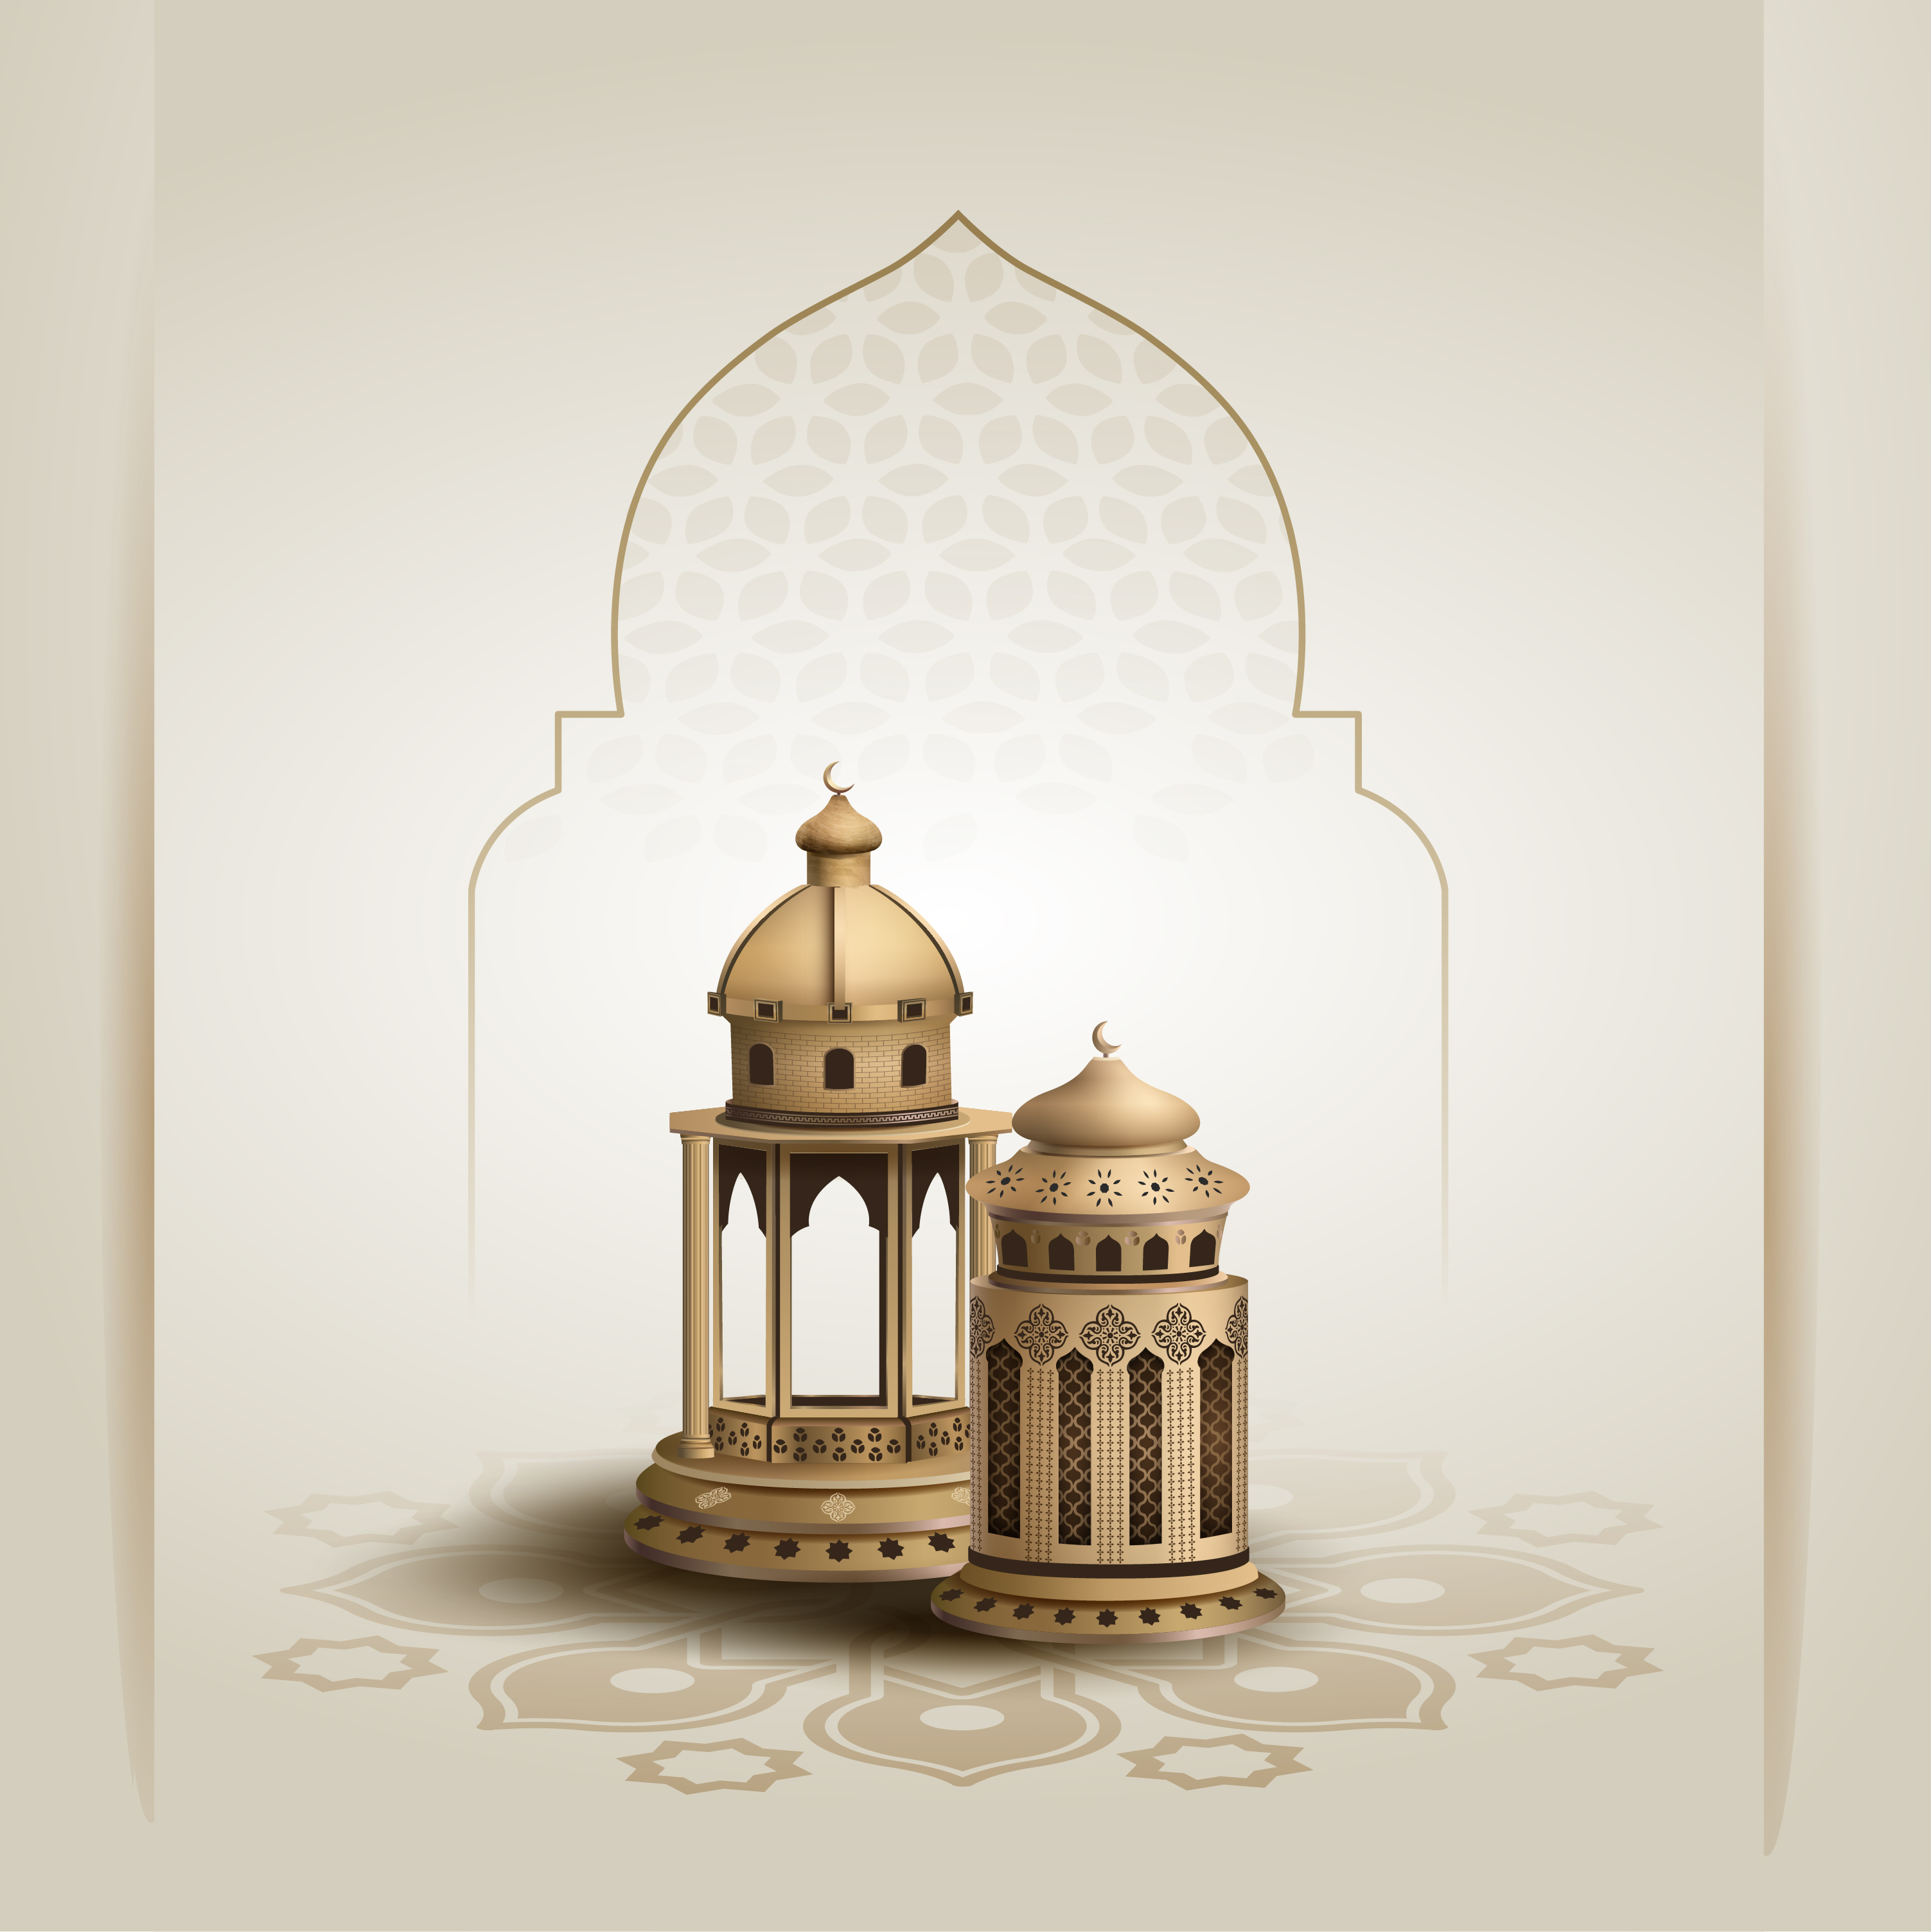 Islamic Eid Mubarak Lantern Card Design 1114798 Download Free Vectors Clipart Graphics Vector Art